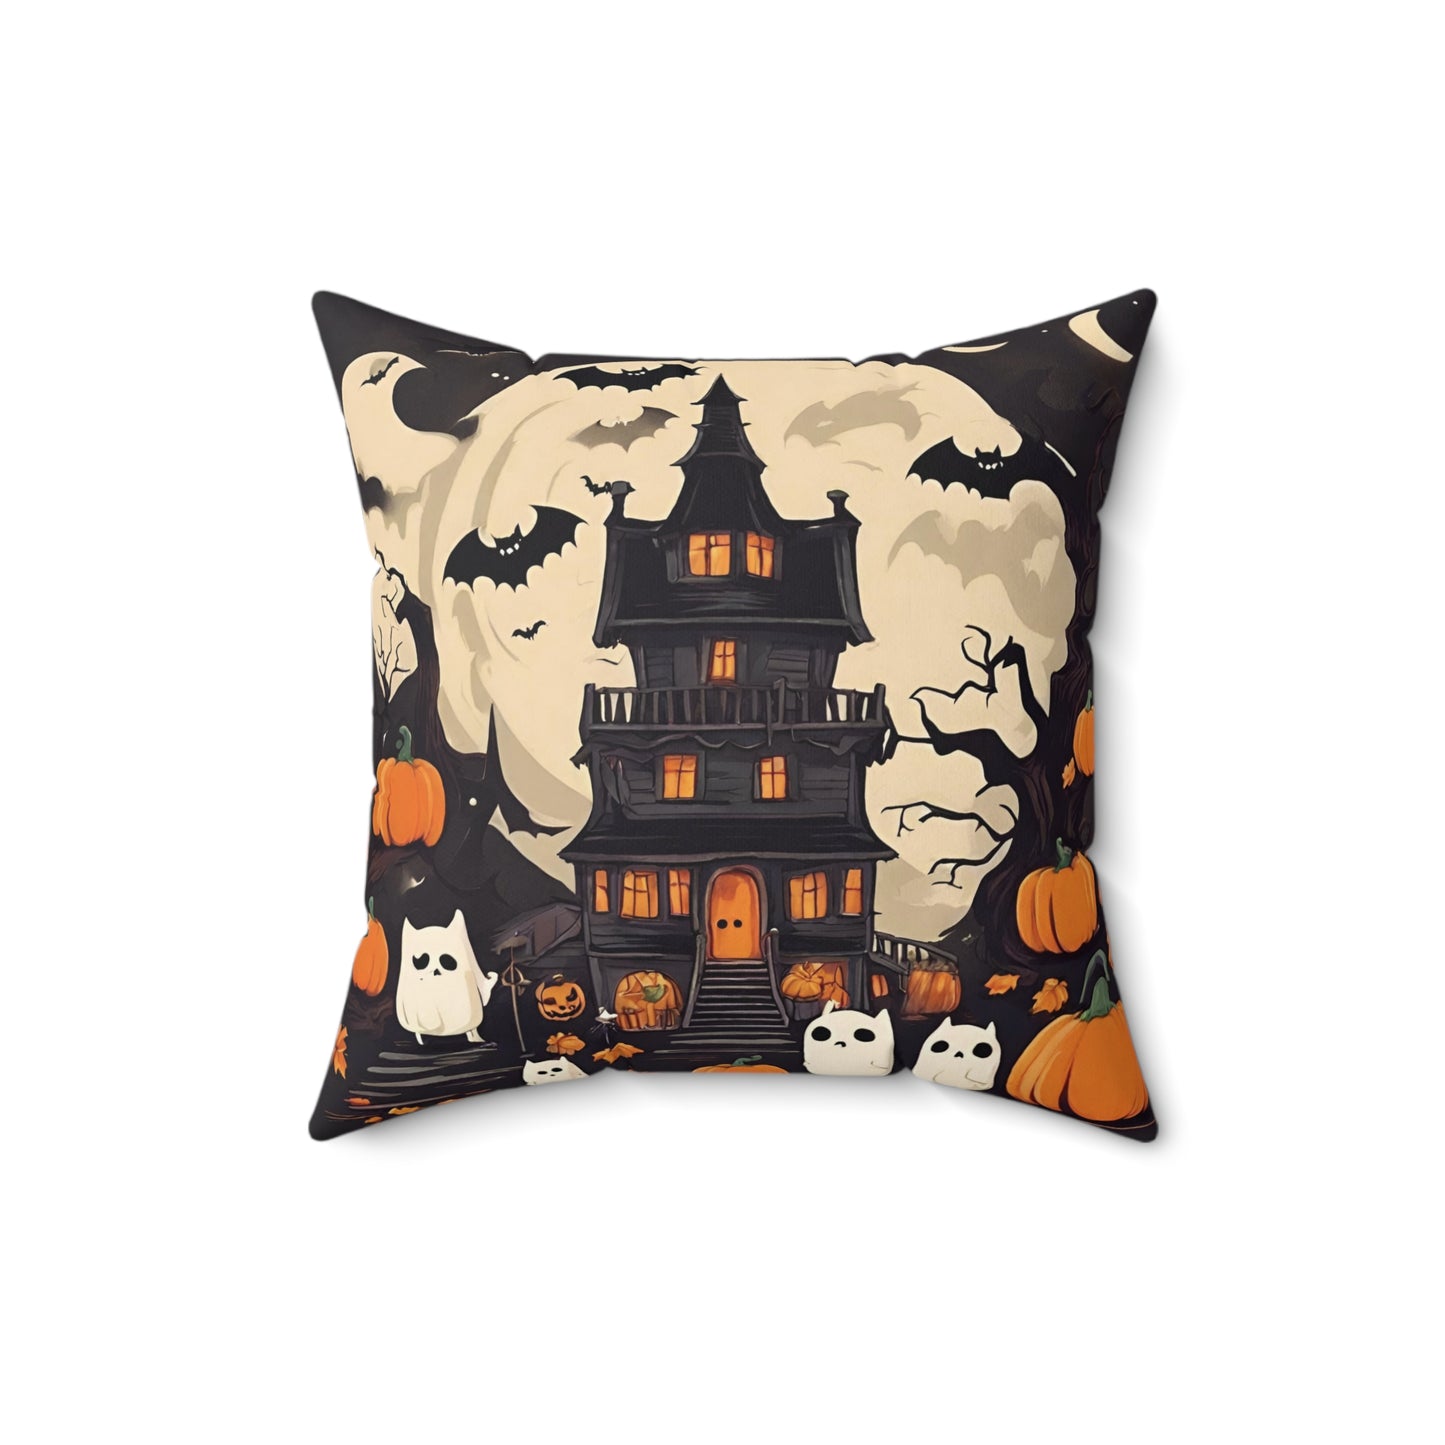 16" × 16" Home Decor Halloween Throw Pillows Decor Indoor Interior Design Idea for Home Styling Petrova Designs